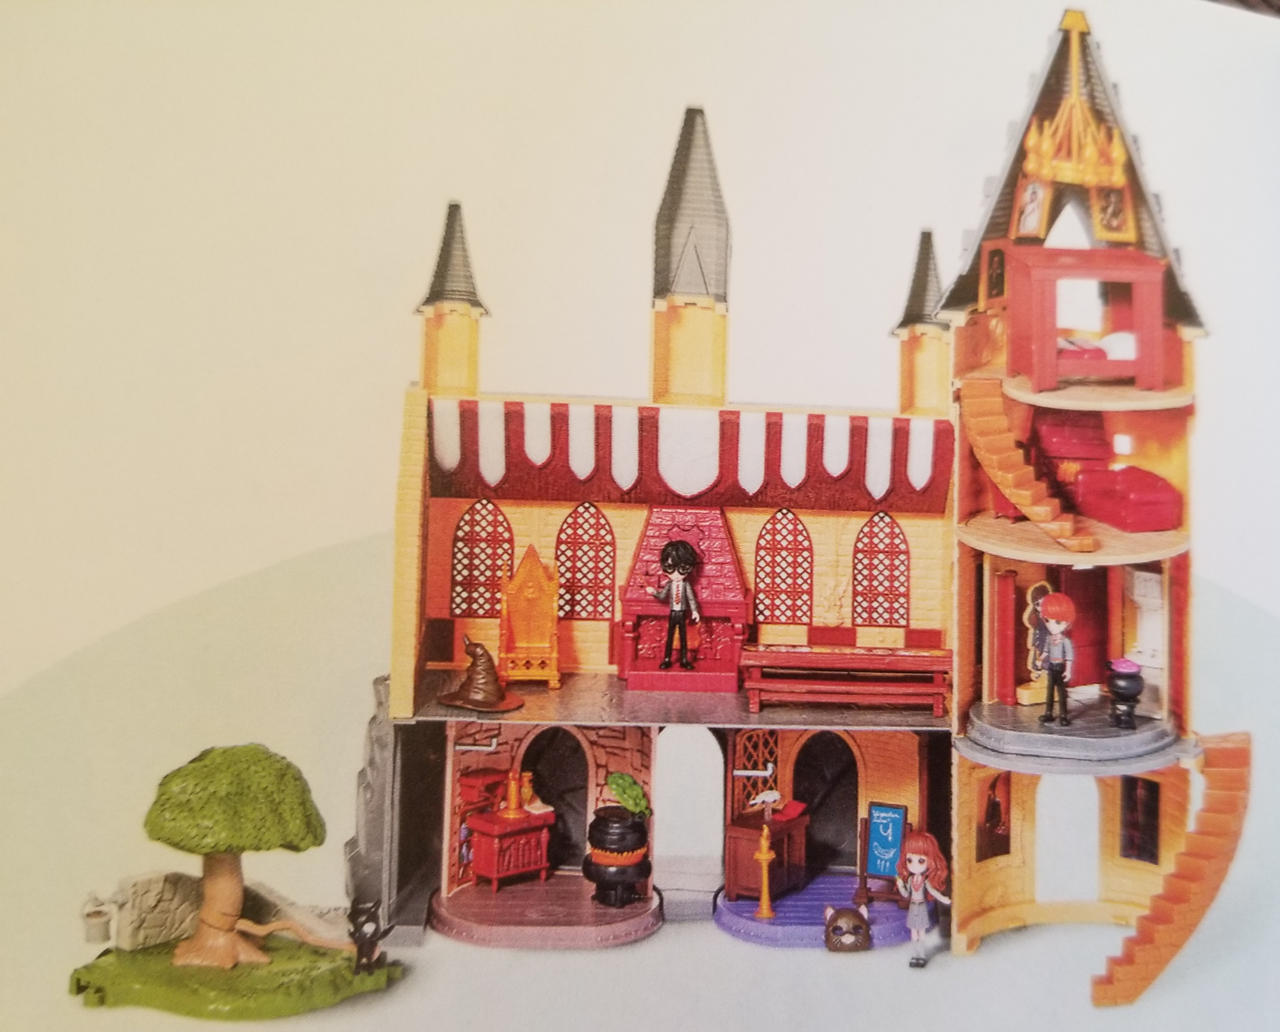 Harry potter Magical Minis Hogwarts Castle Multicolor